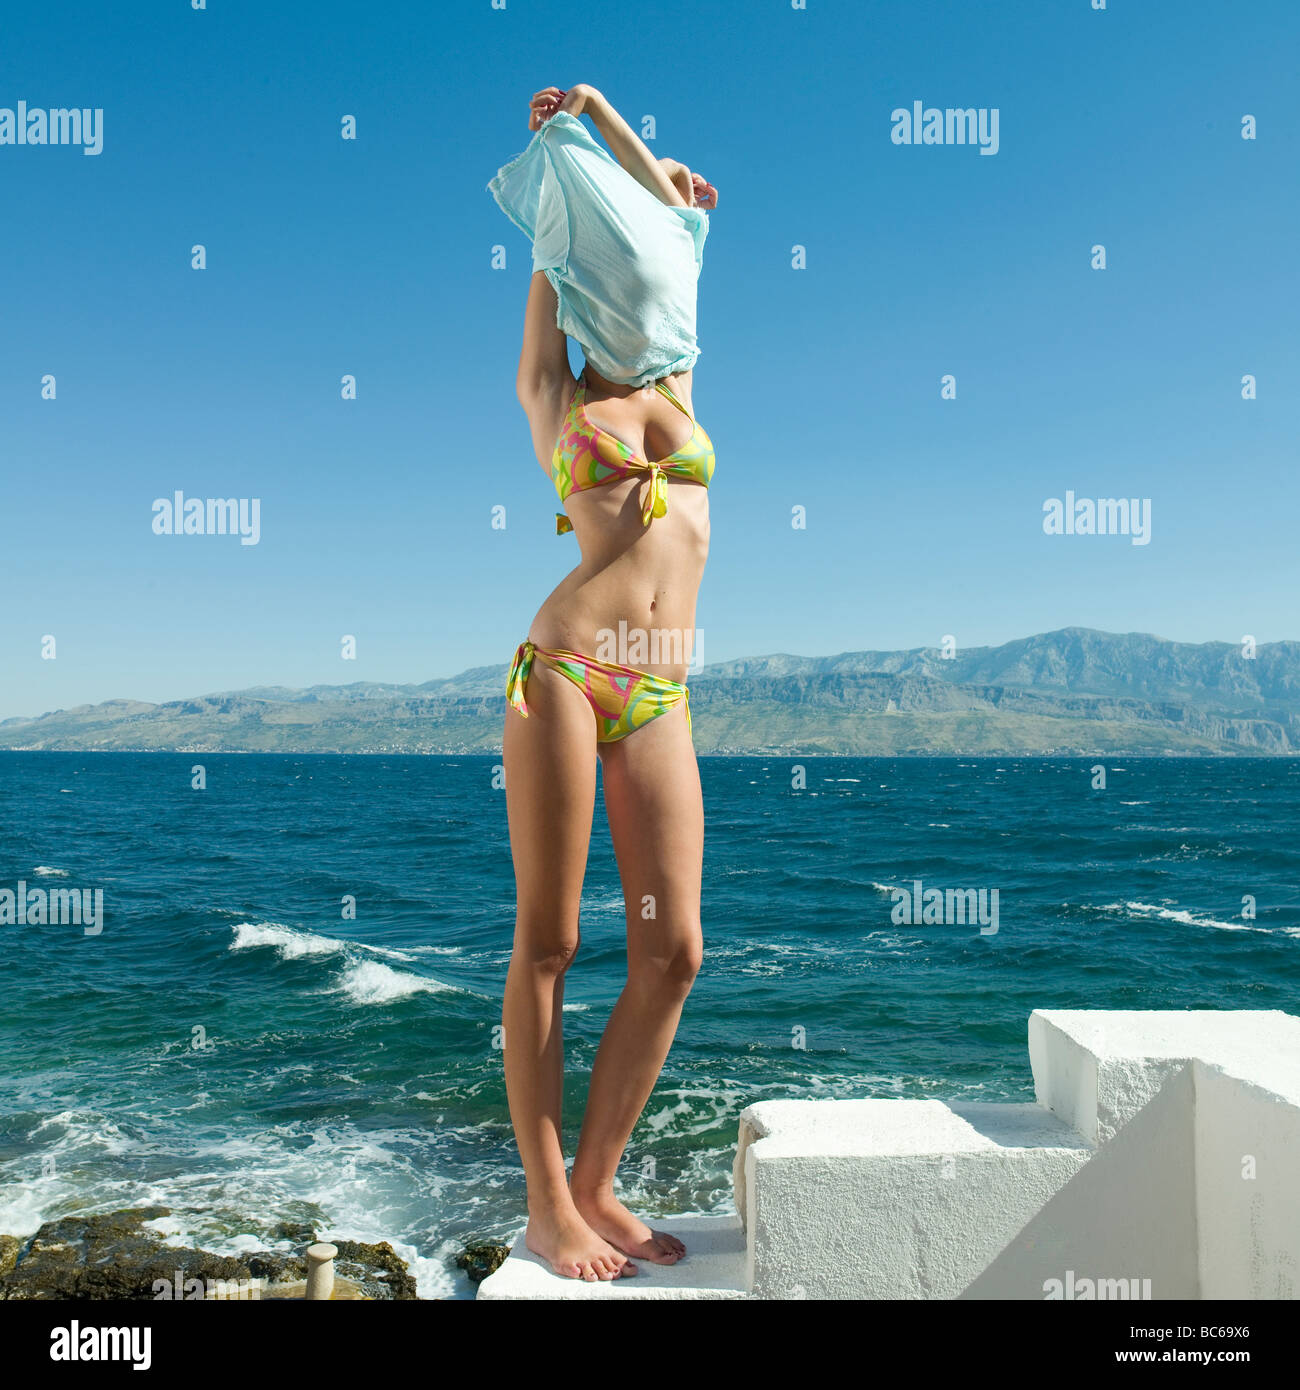 Young woman wearing bikini, taking off shirt by sea Stock Photo - Alamy.